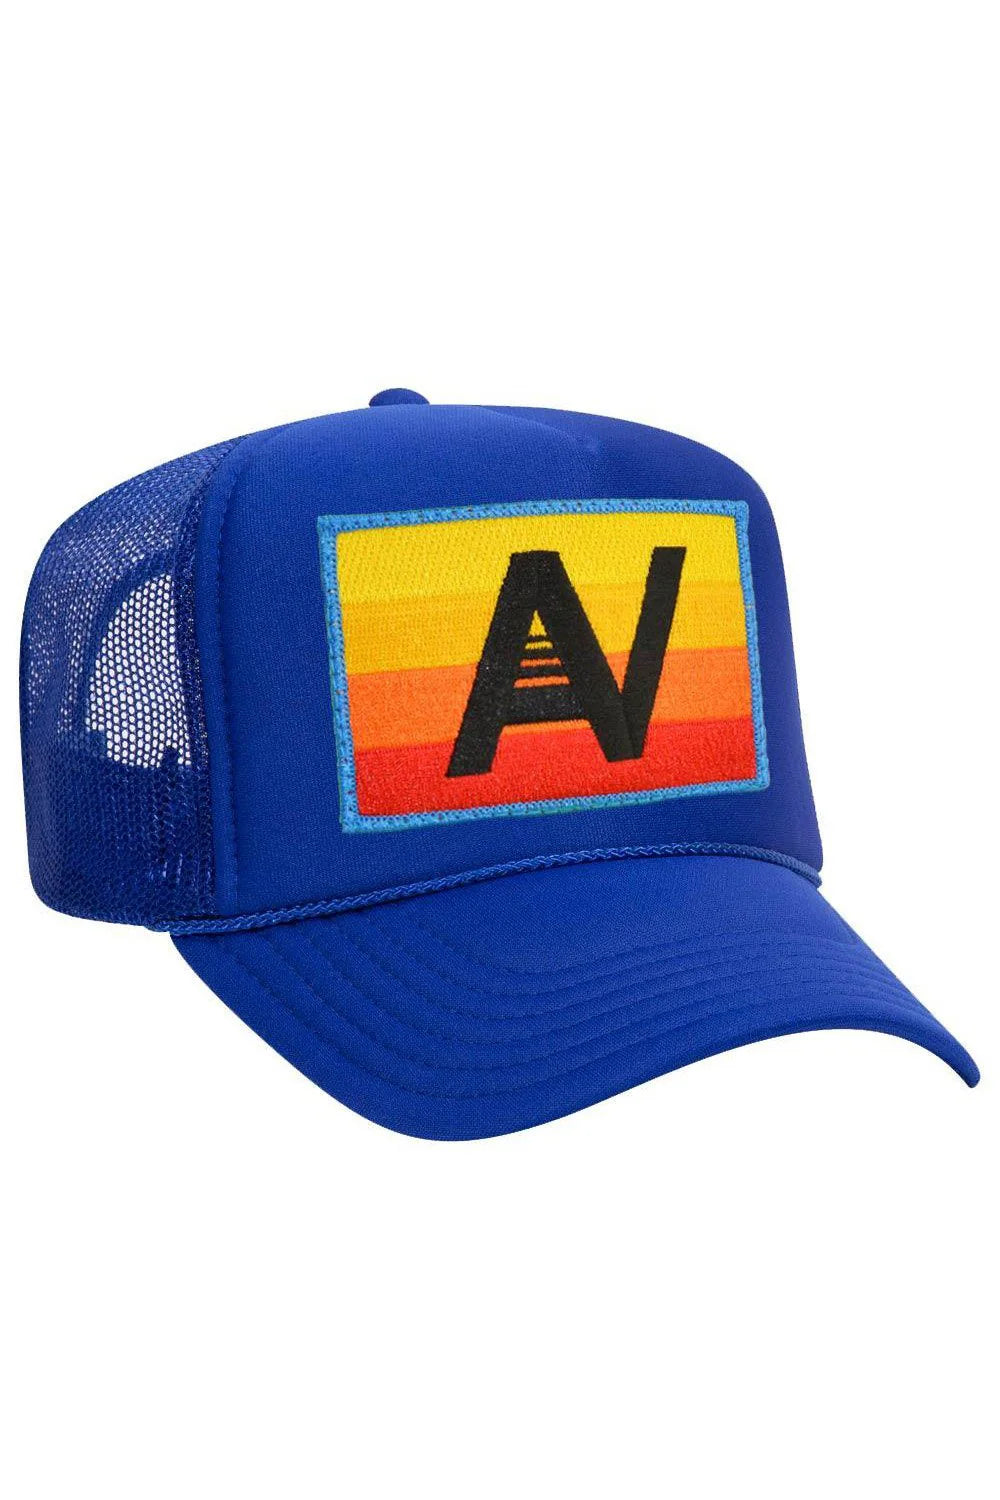 Aviator Nation Logo Rainbow Trucker Hat - Royal Blue